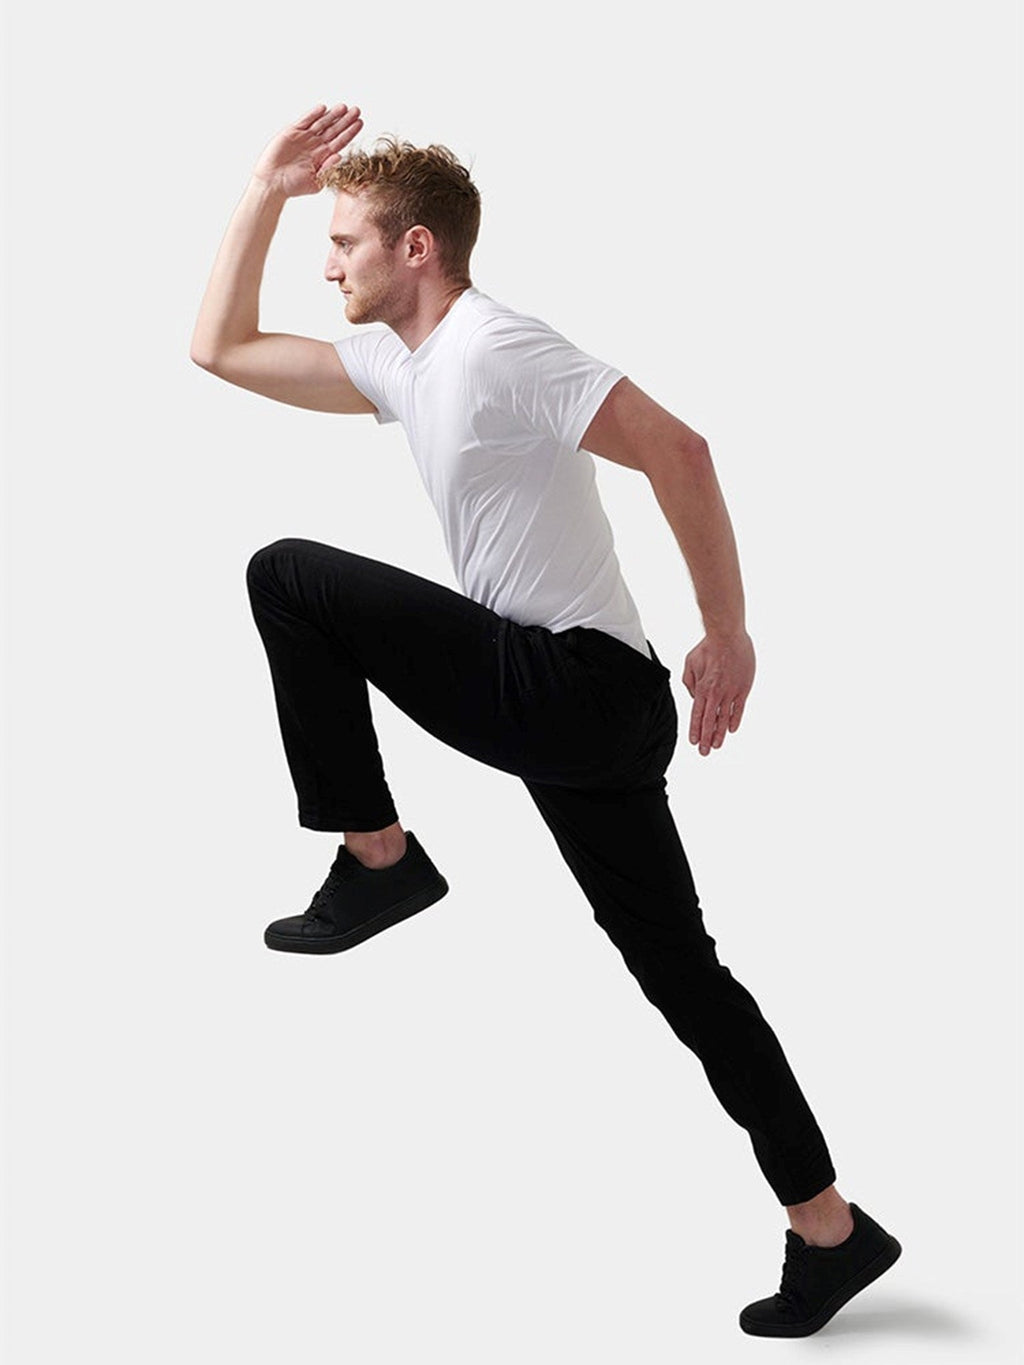 Glenn Stretch Jeans - schwarz (schlank)